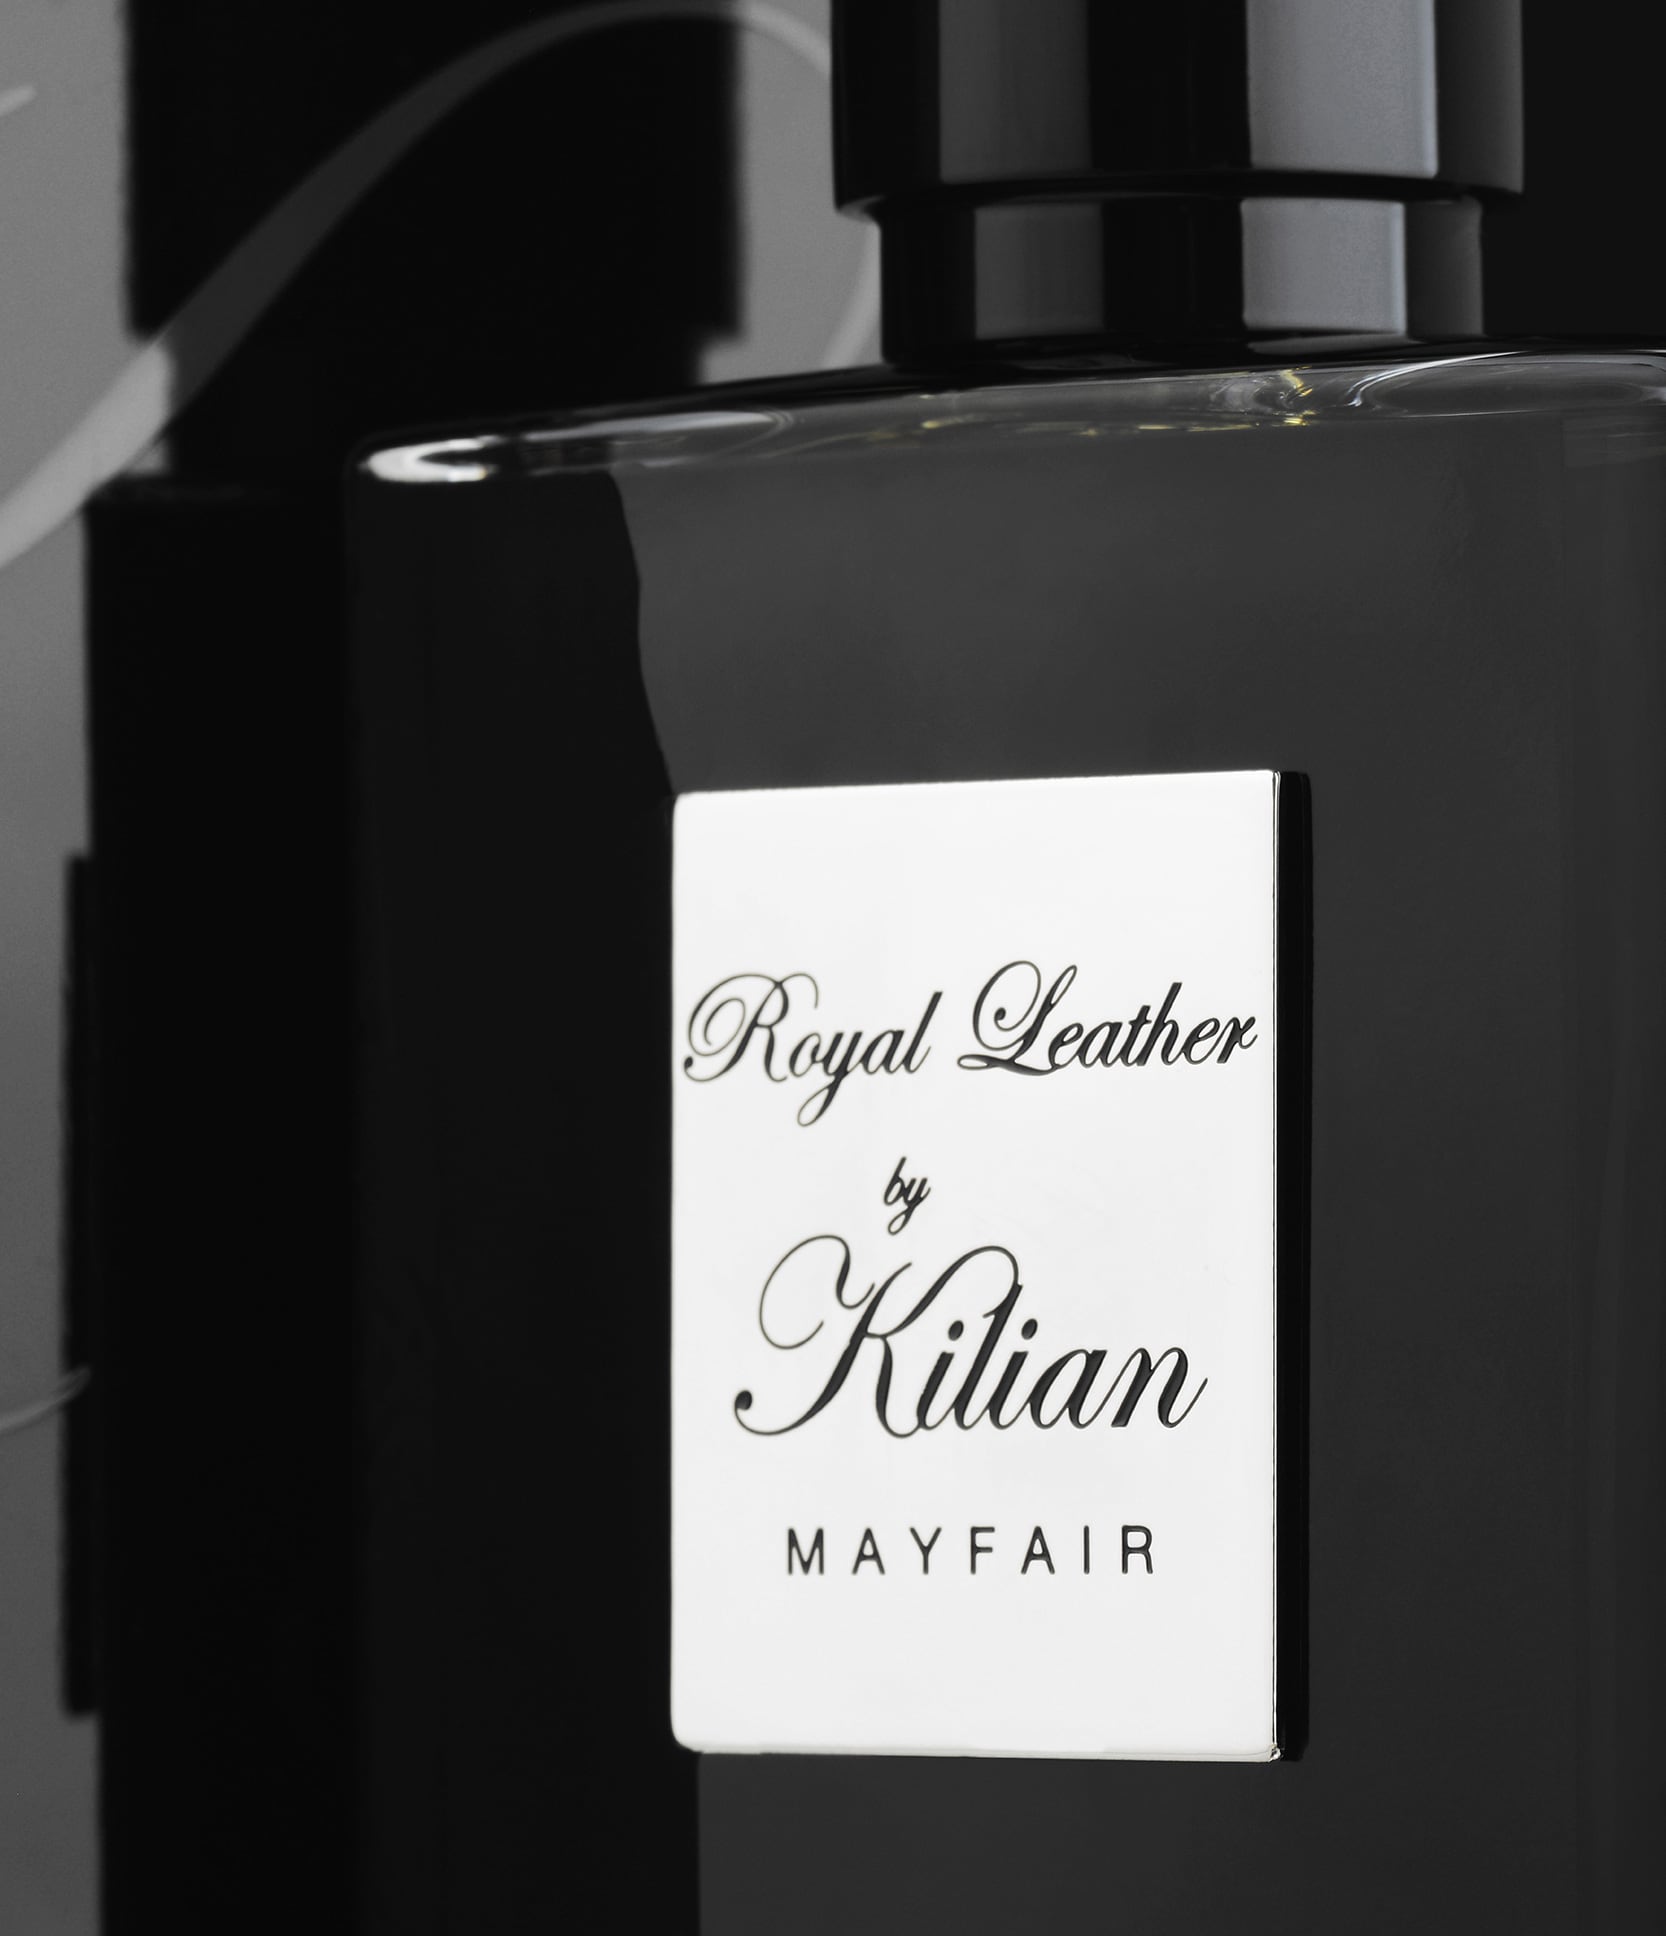 Royal Leather, Mayfair